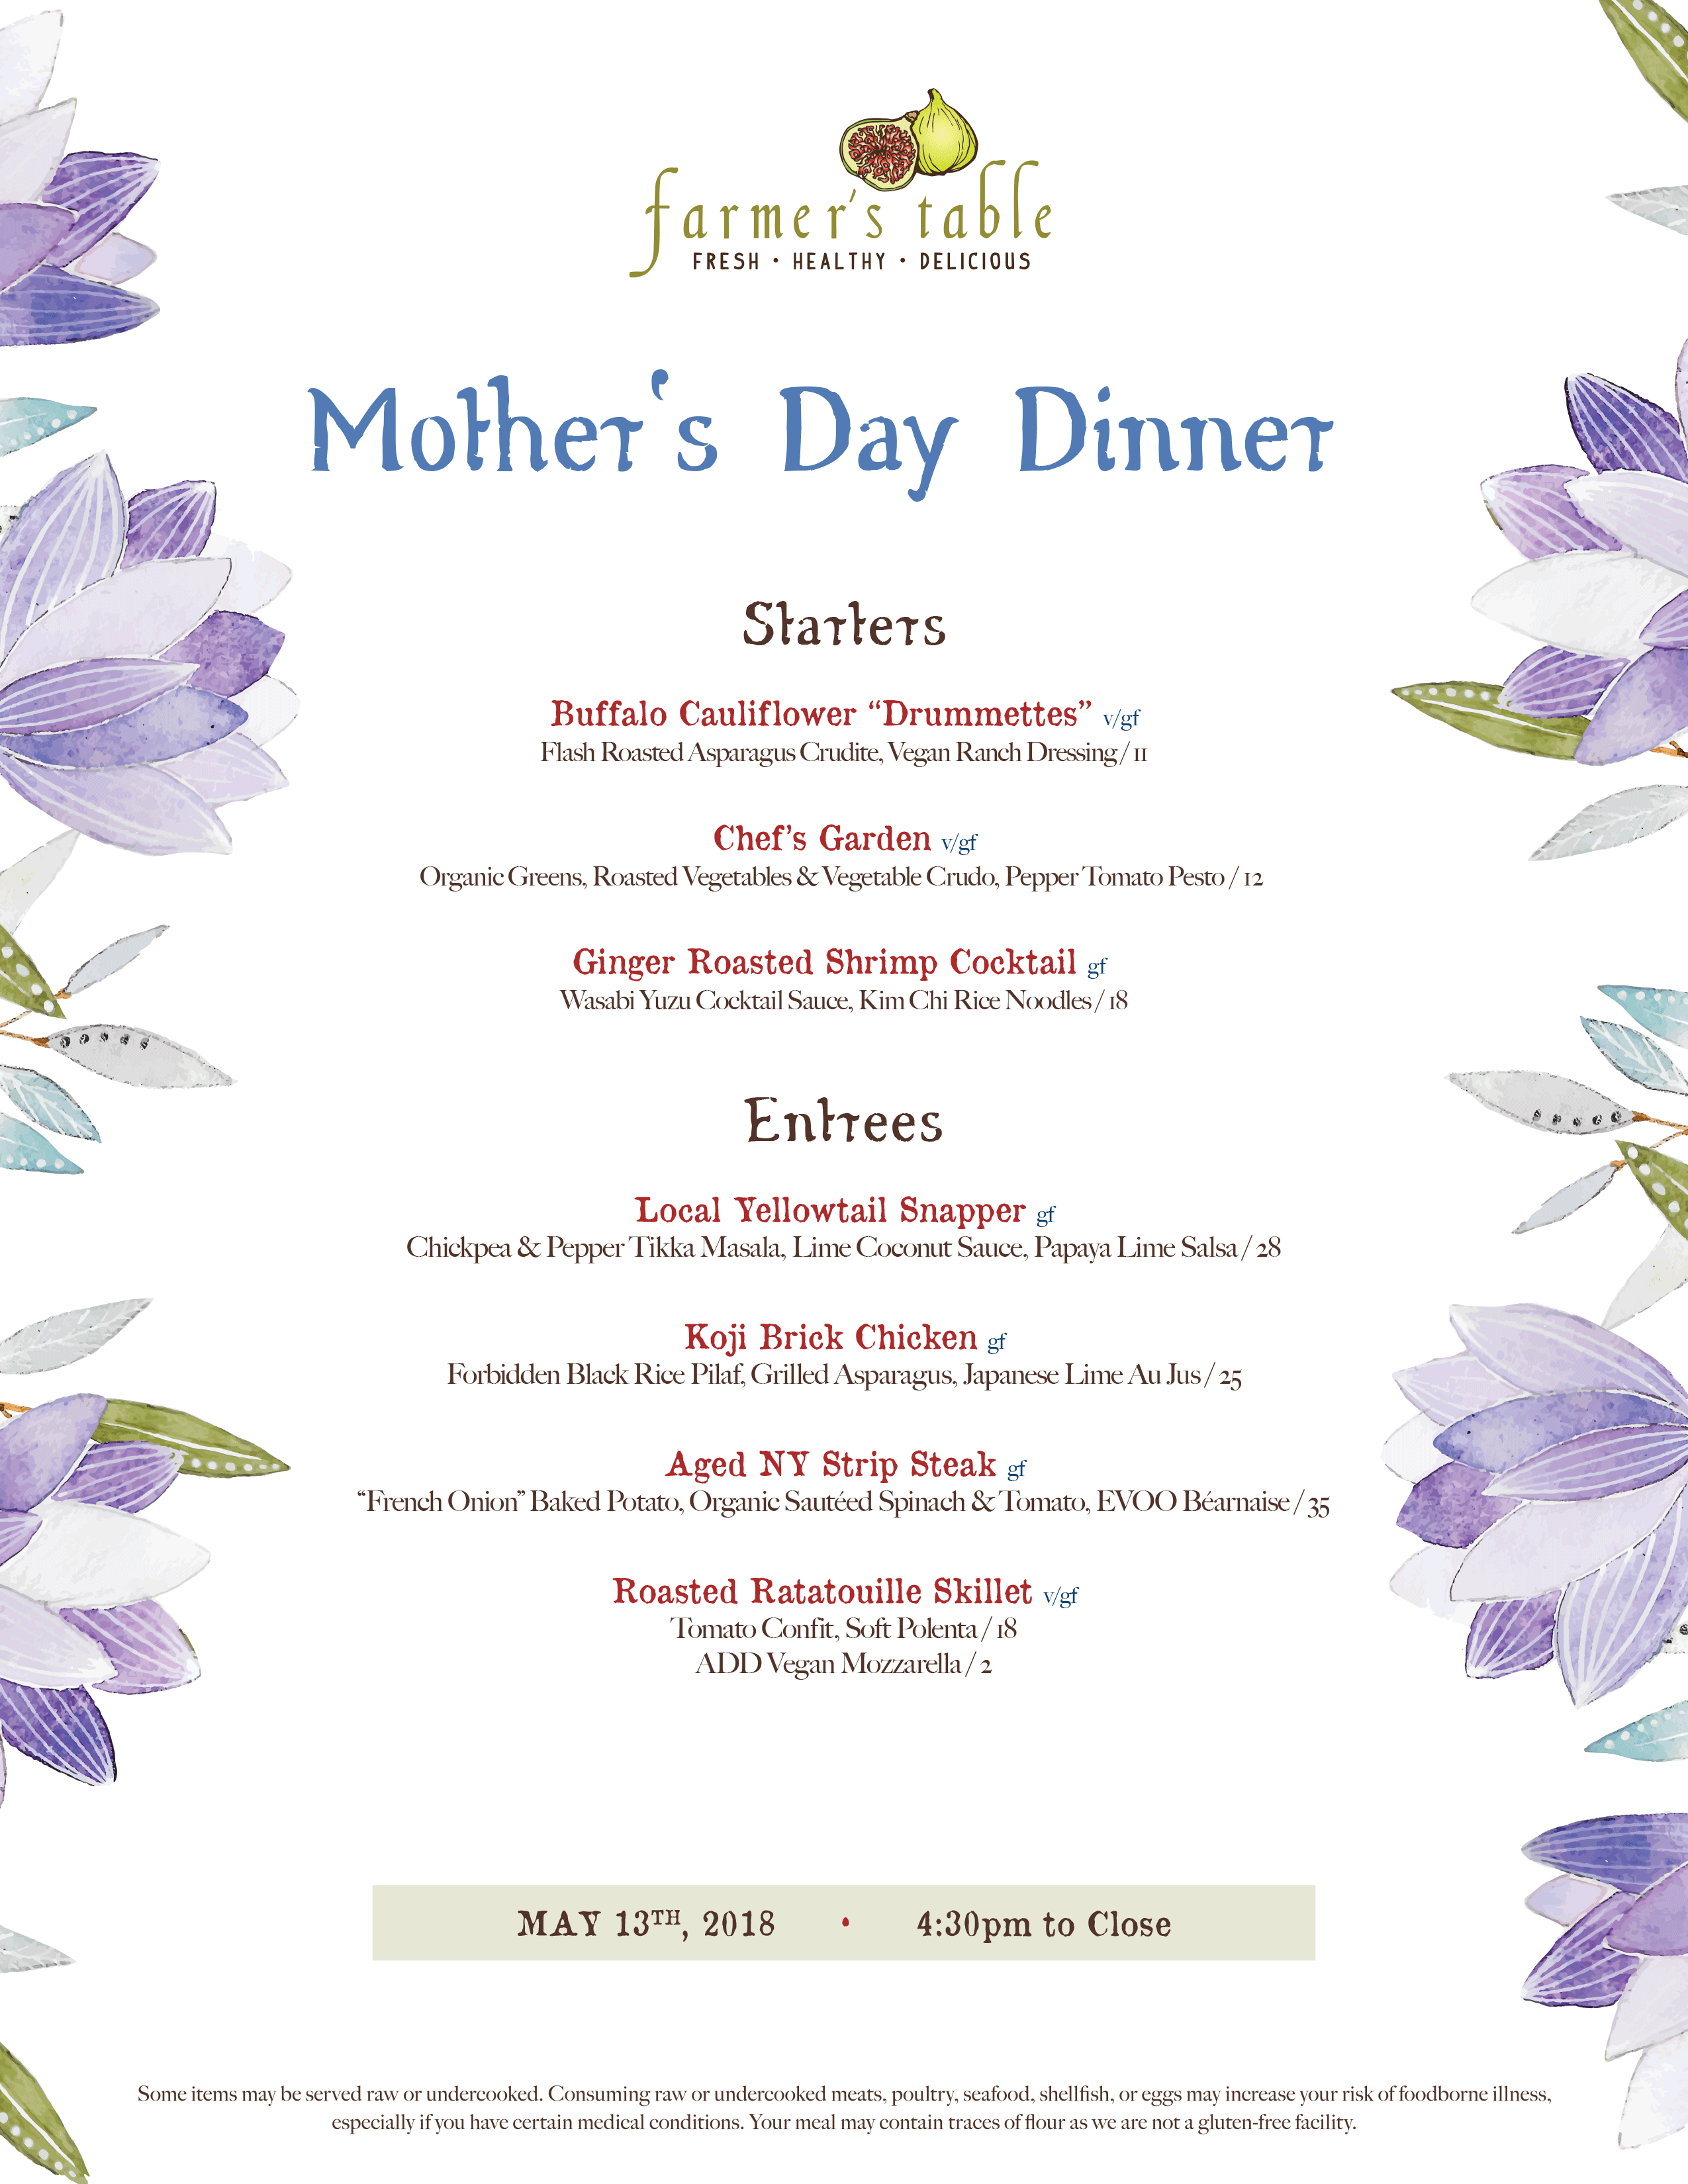 mothersday-dinnermenu